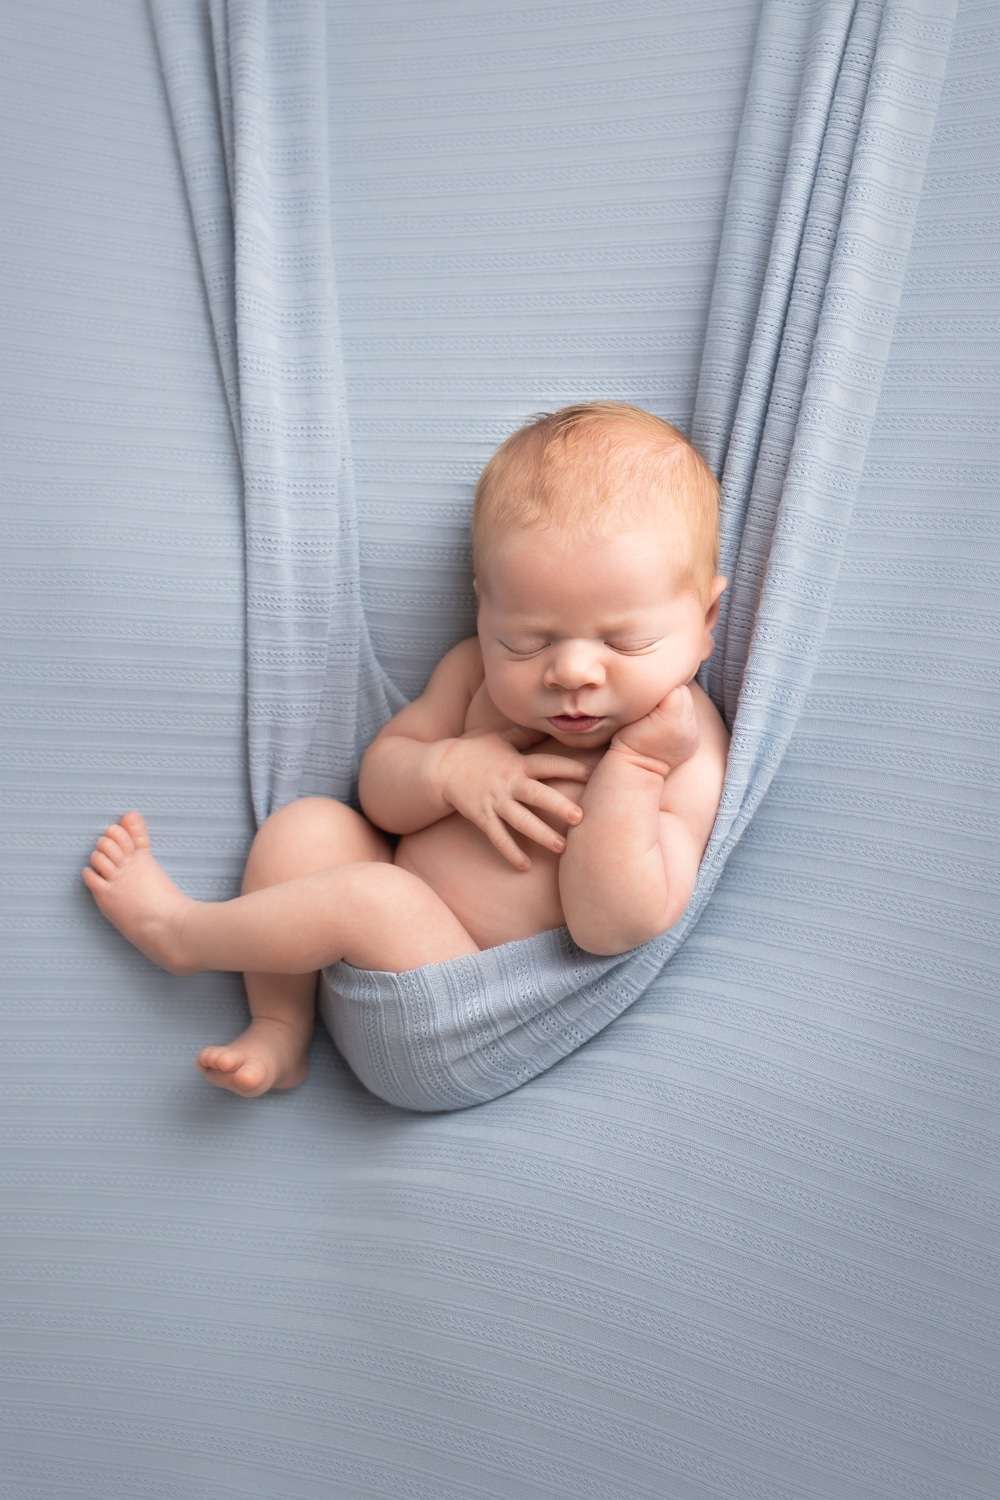 newborn photographer in rochester ny captures newborn baby boy sleeping in hammock pose